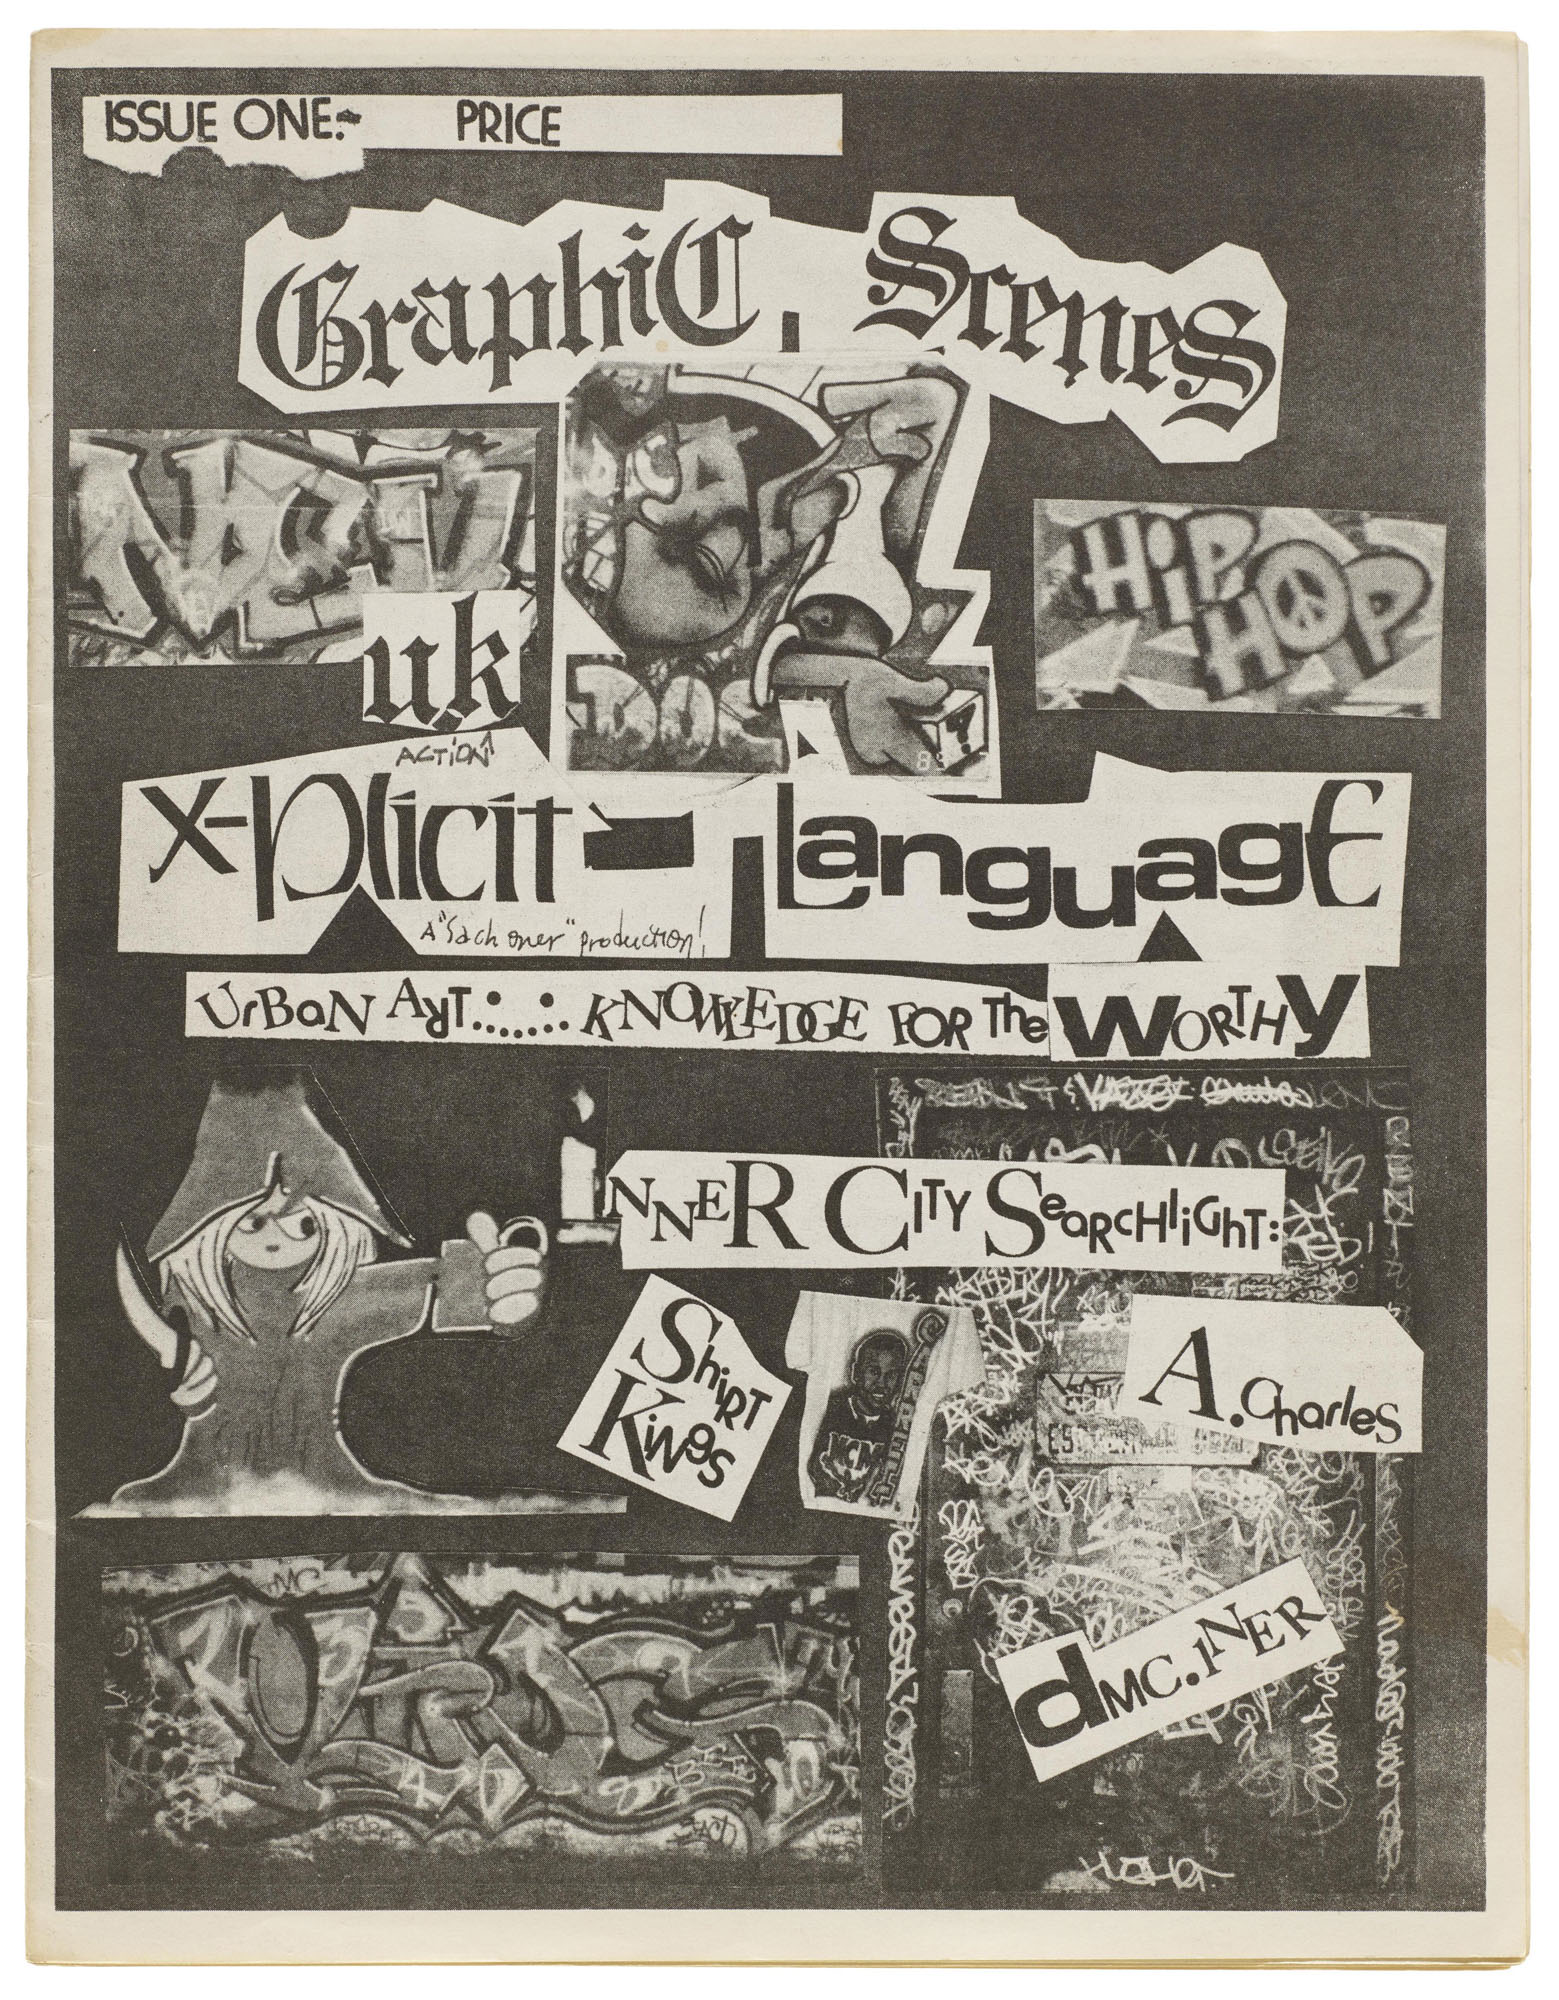 Sacha Jenkins, Graphic Scenes & X-plicit Language (G.S.E.L.), volume 1, issue 1, 1989, New York